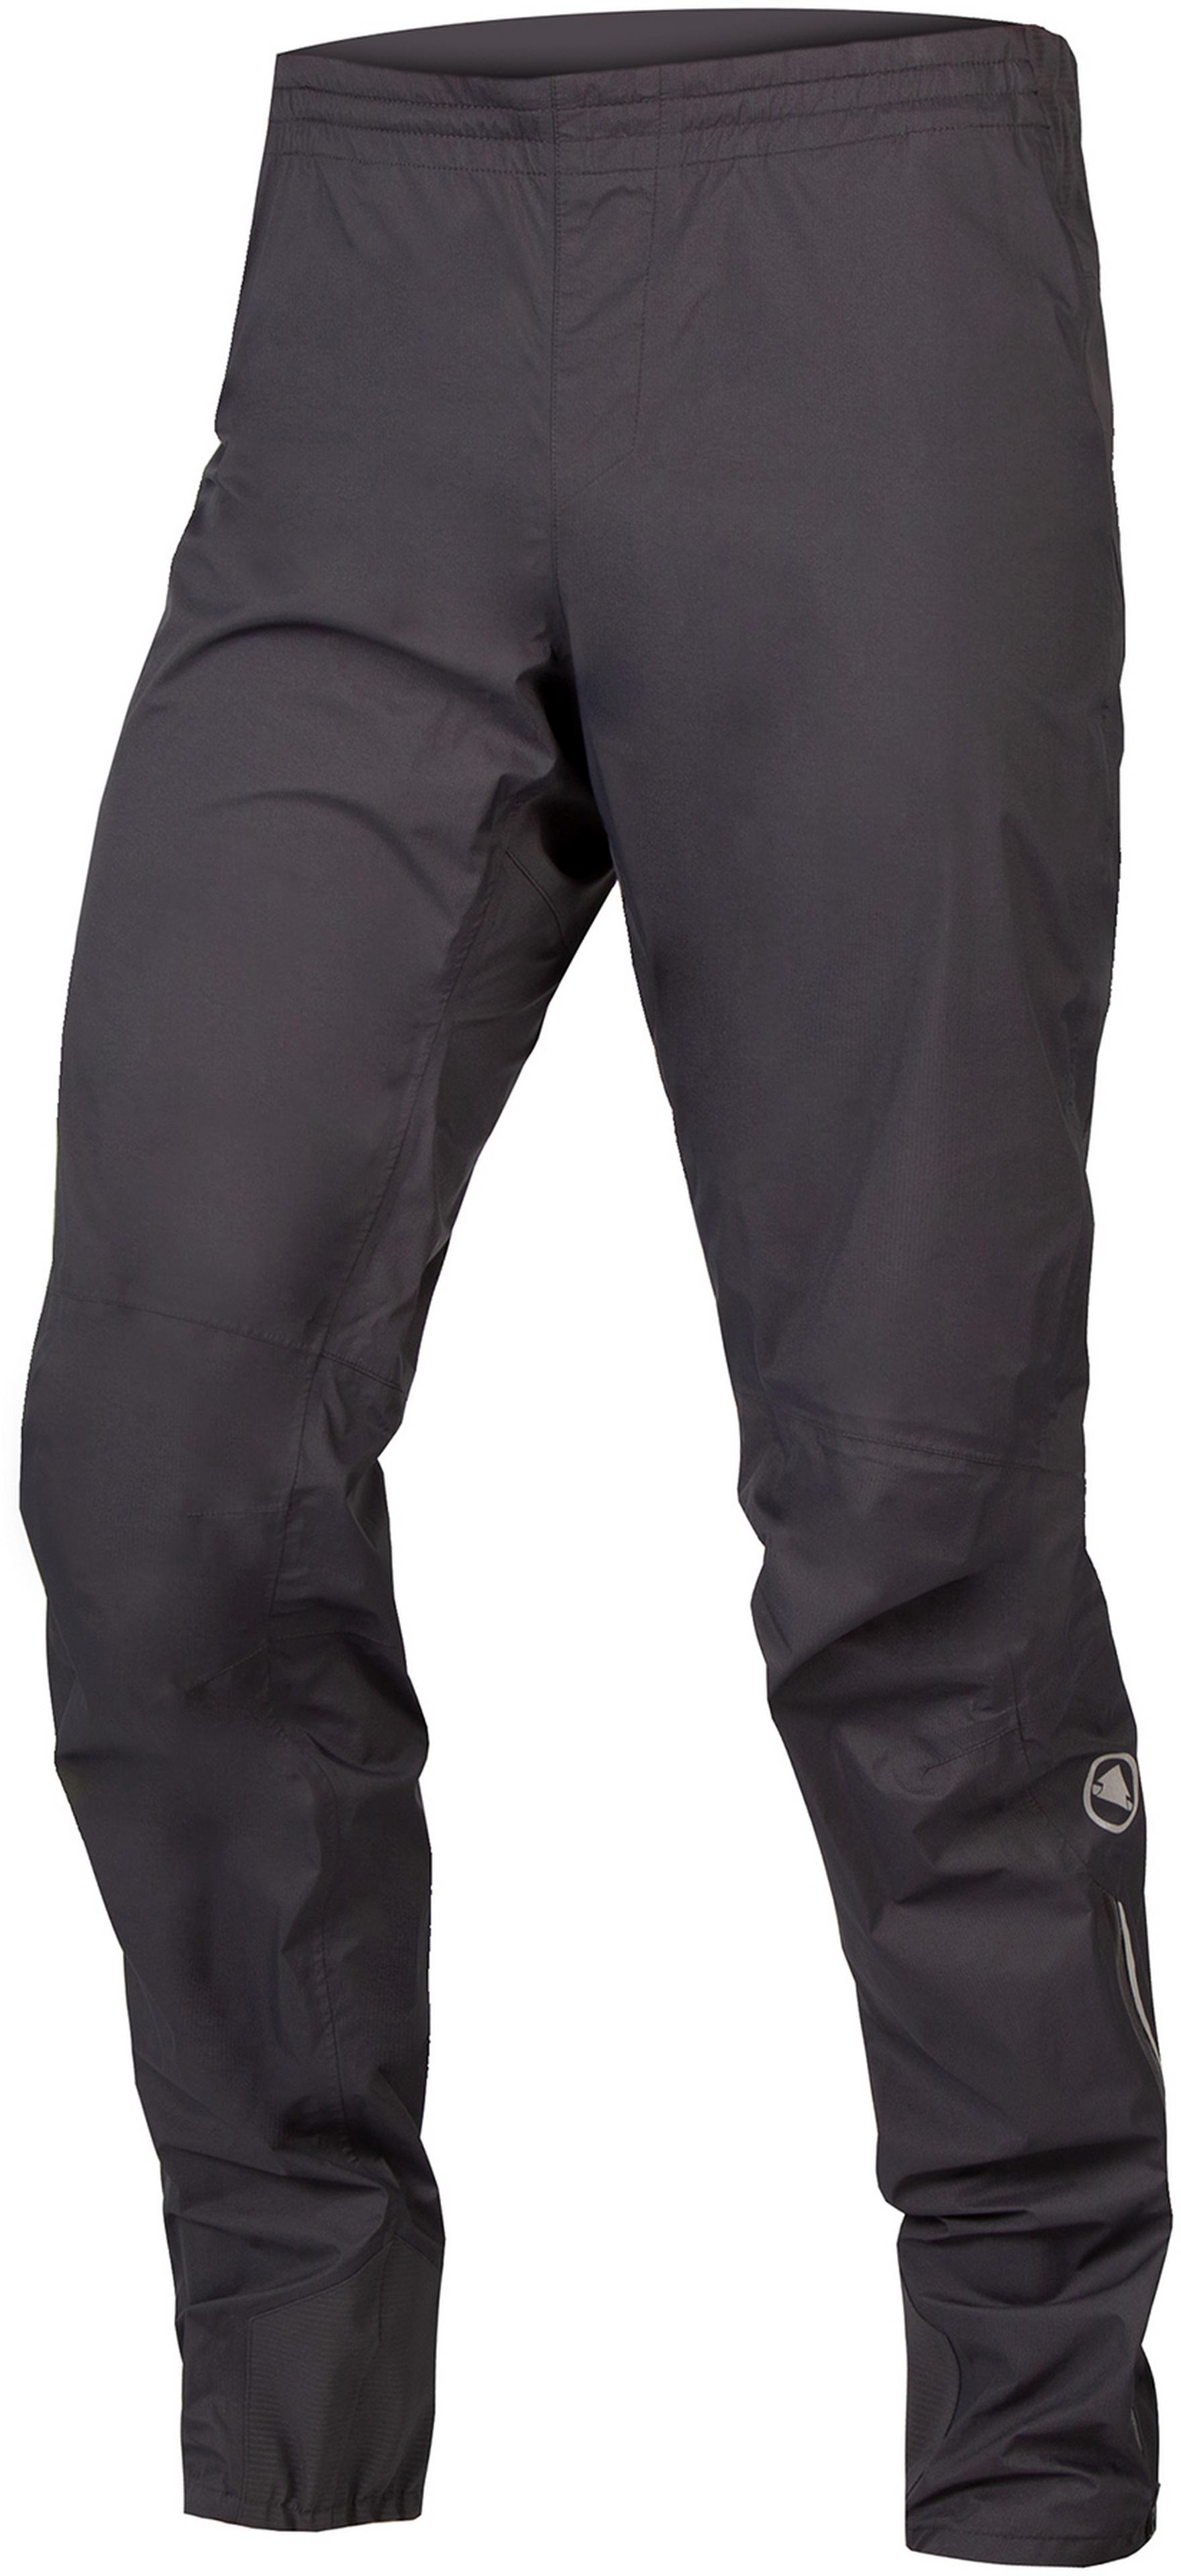 Endura GV500 Waterproof Cycling Trousers